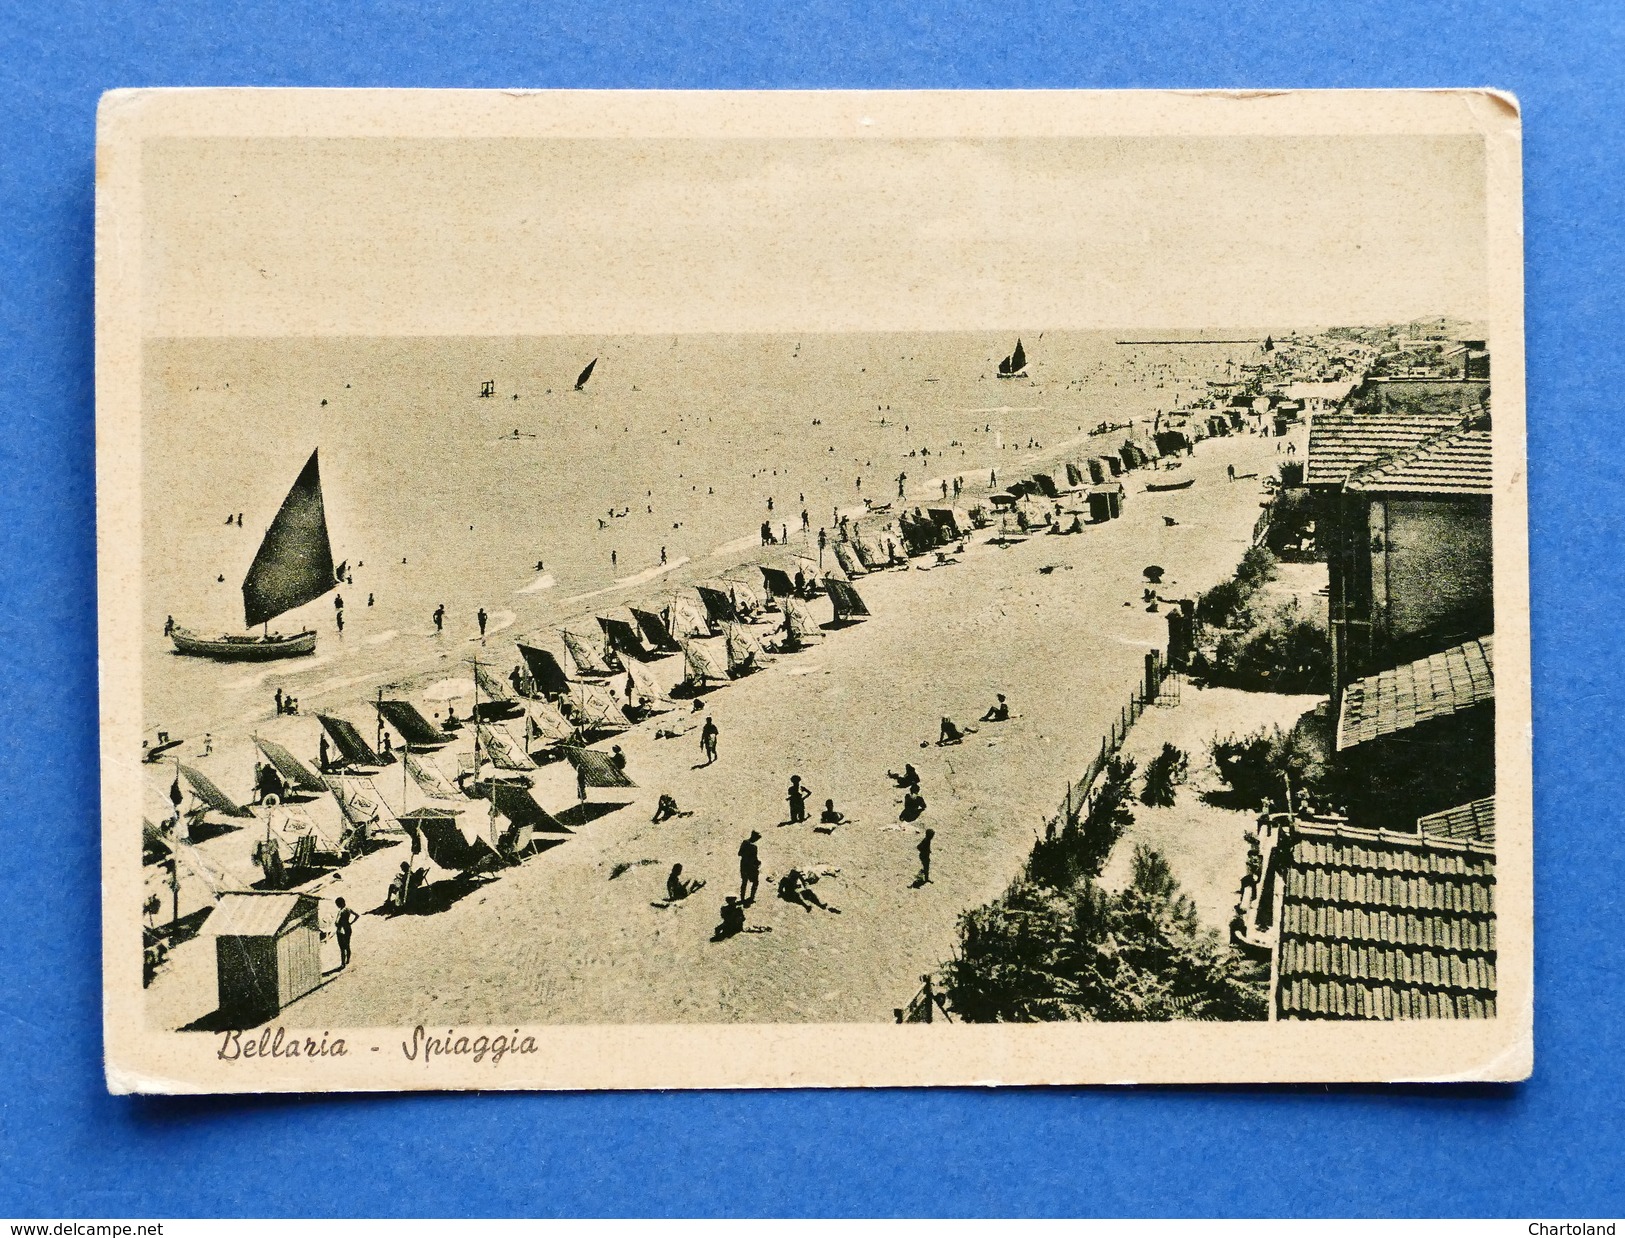 Cartolina Bellaria - Spiaggia - 1950 - Rimini